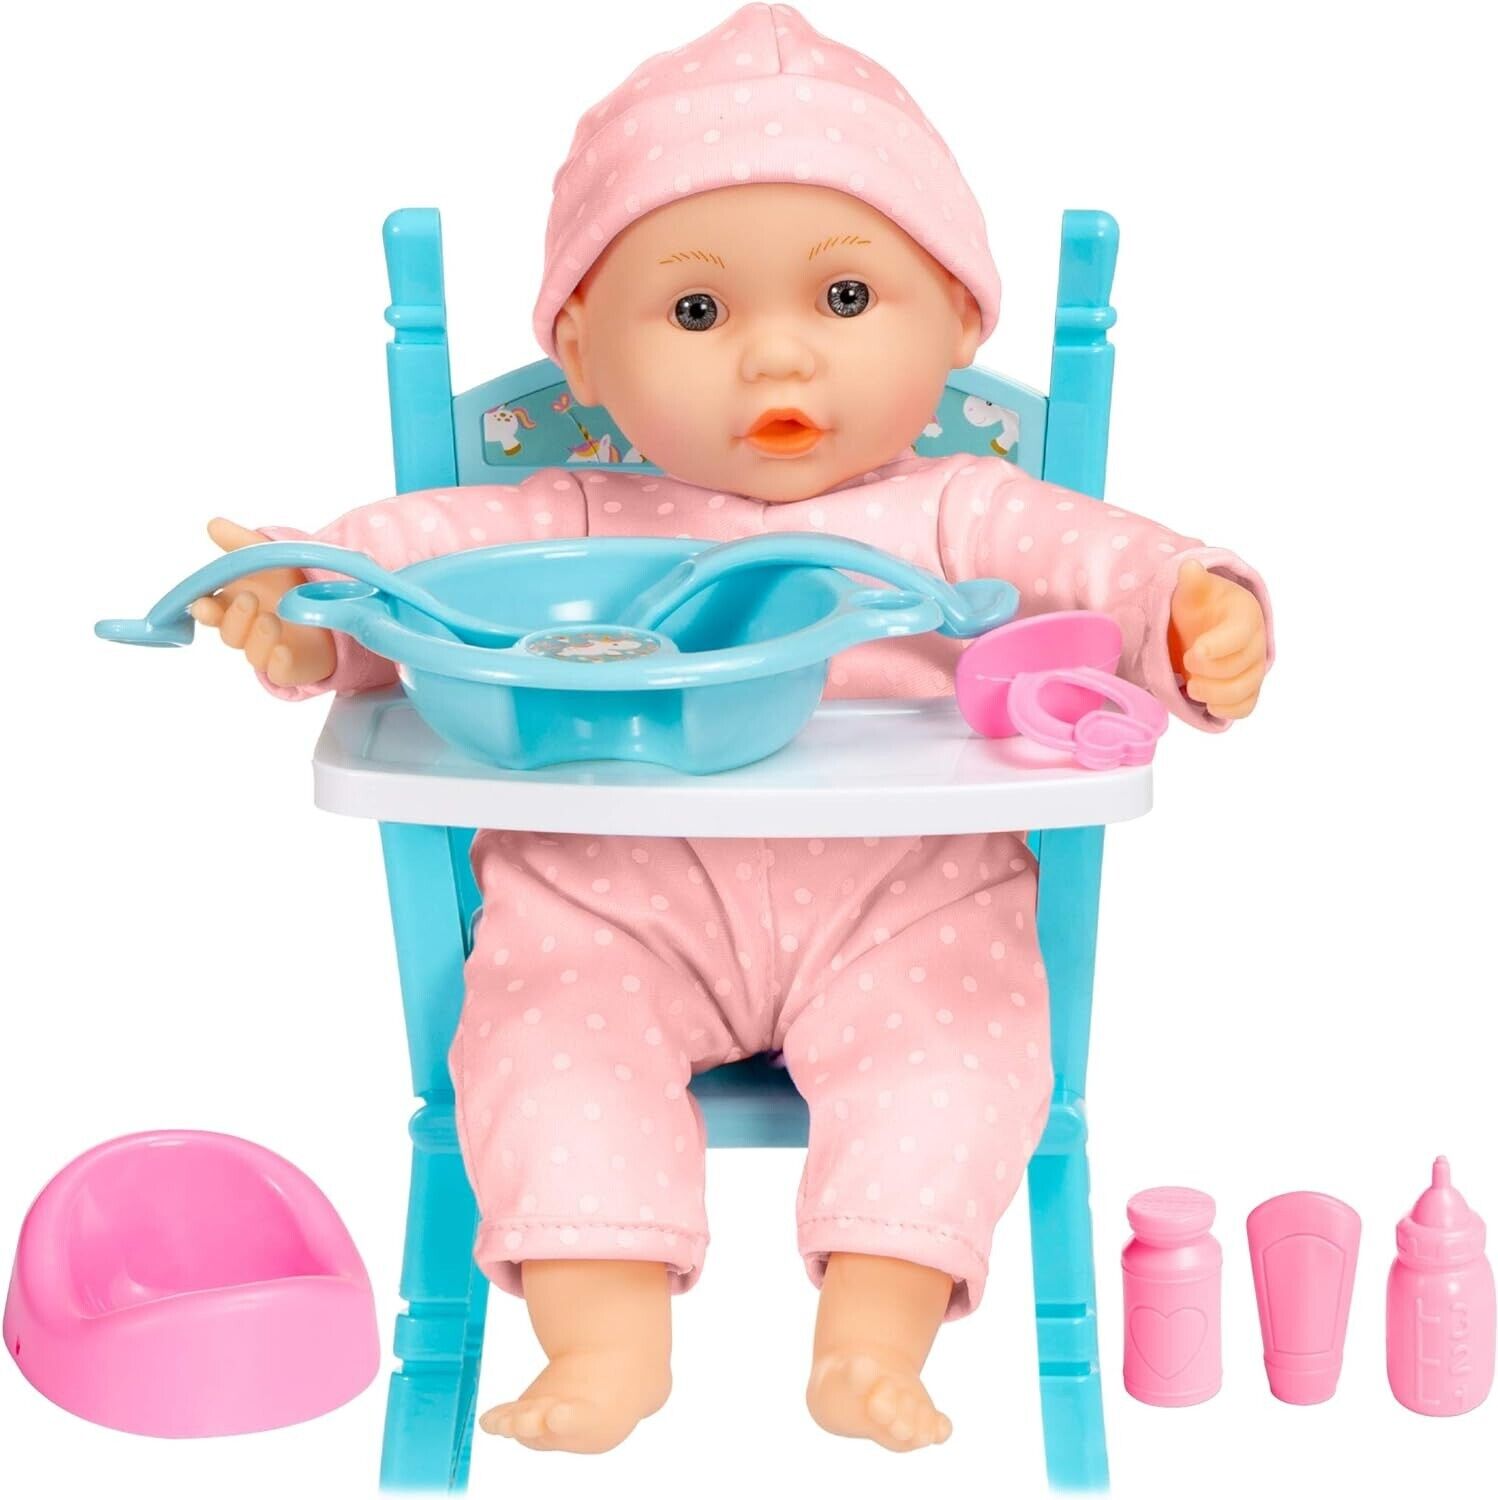 Doll Realistic Toddler Baby Reborn Girl Body Dolls Inch Full Vinyl 22 Gifts Toy